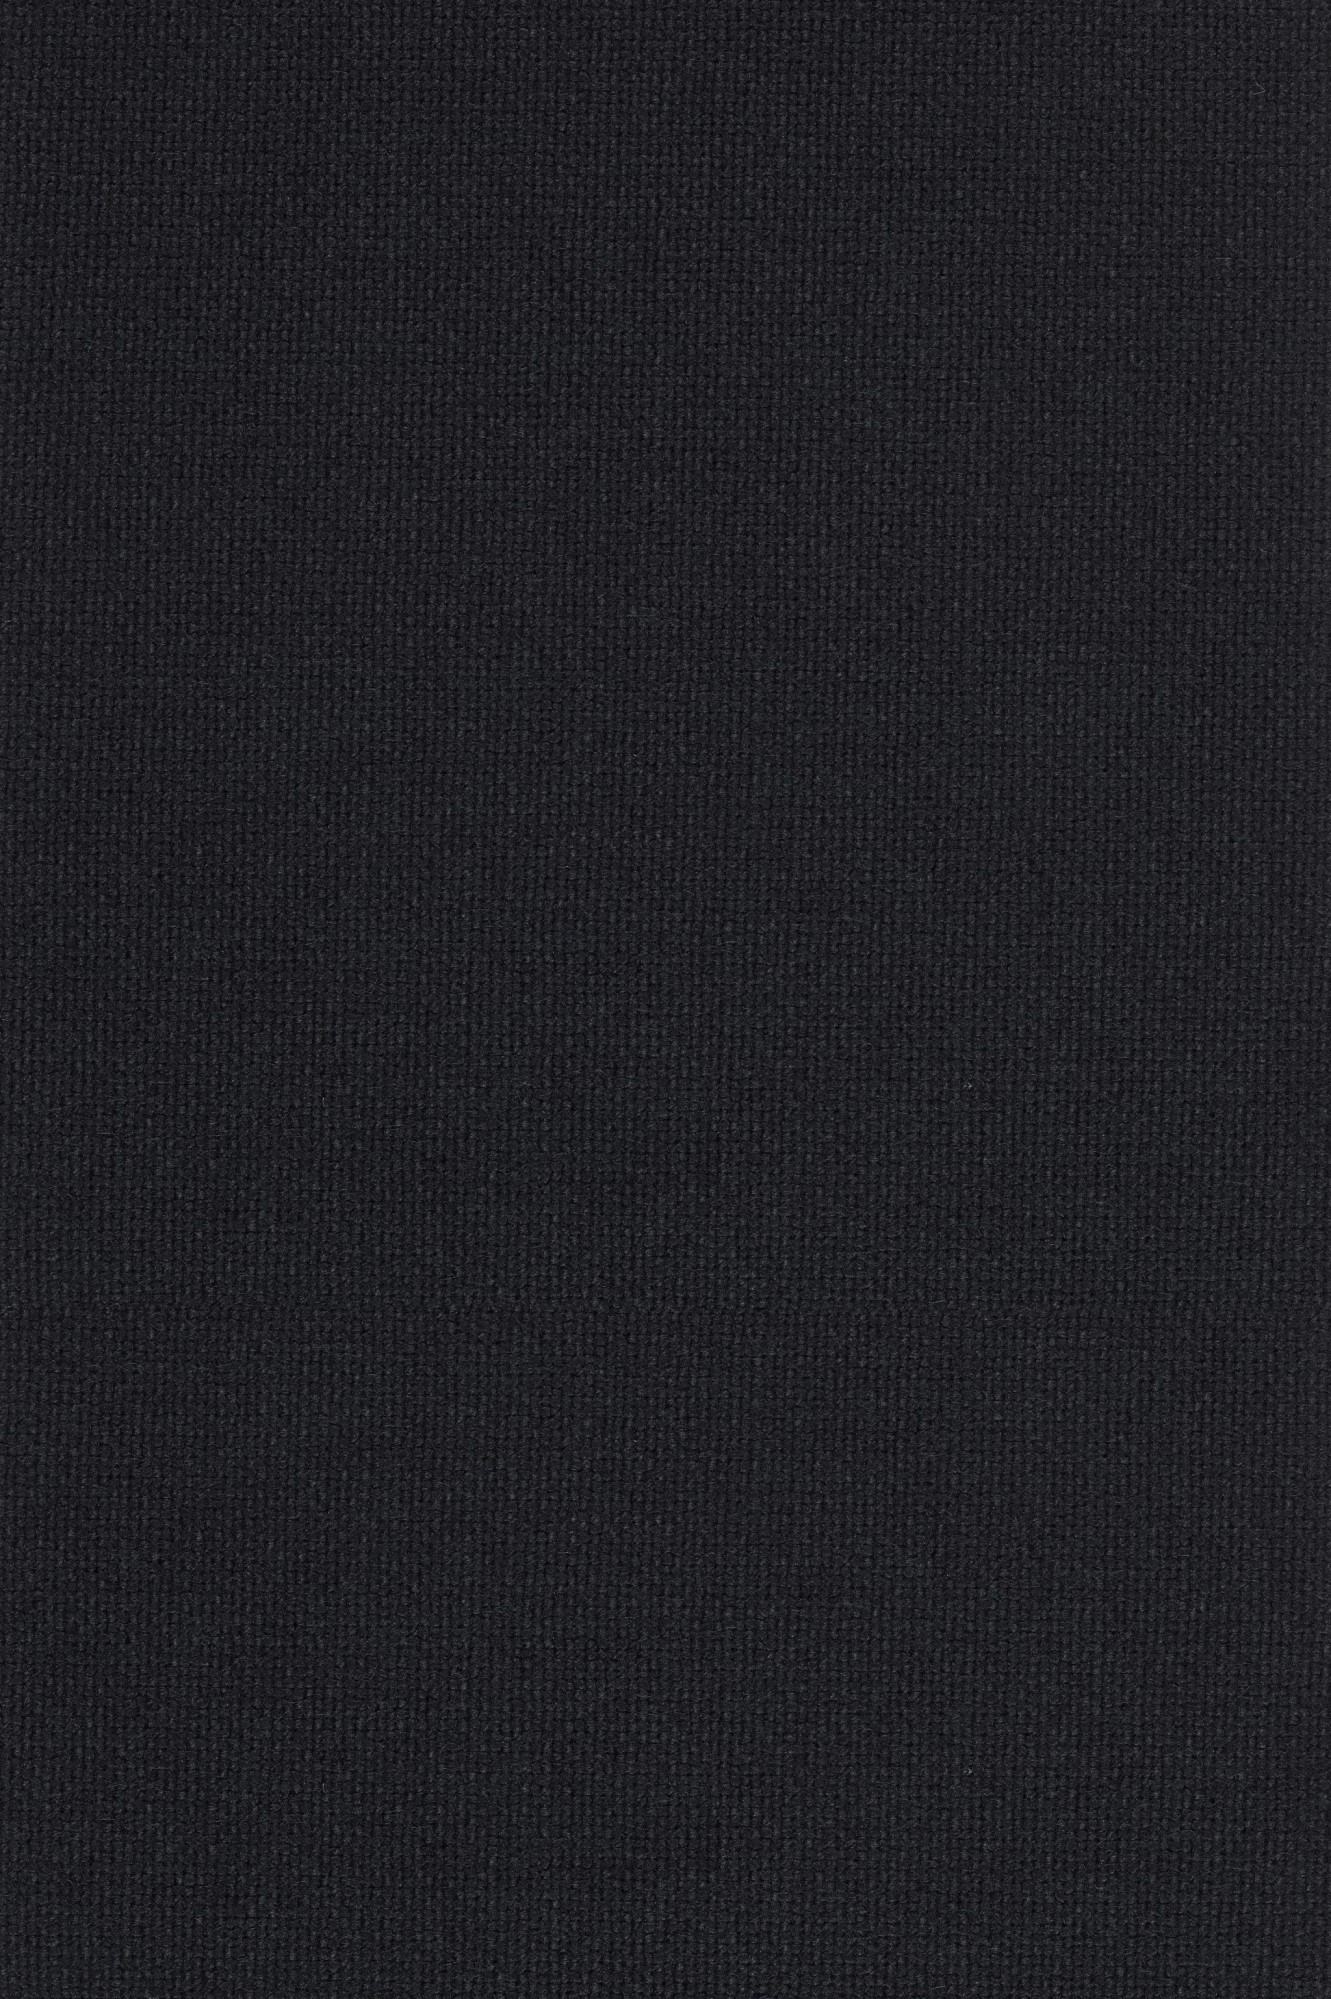 Fabric sample Hallingdal 65 190 grey